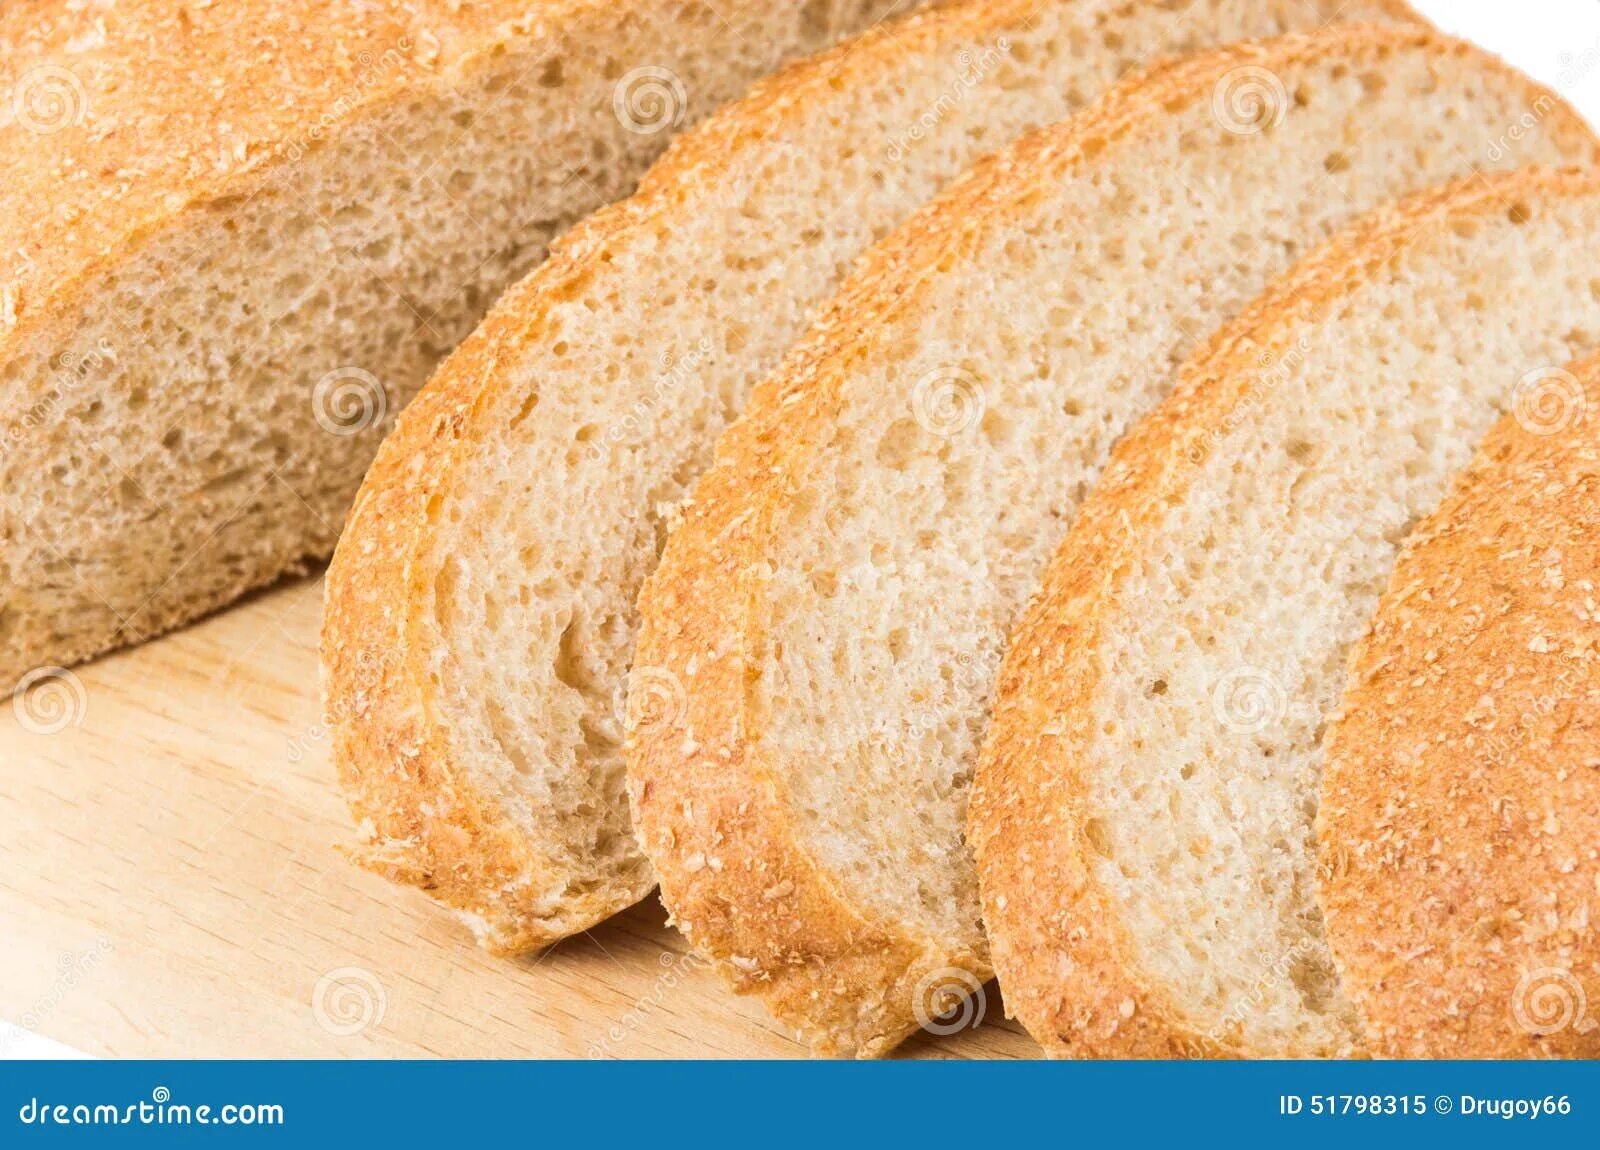 Хлеб отрубной калорийность. Отрубной хлеб. Хлеб с отрубями. Белый хлеб отрубной. Белый хлеб с отрубями.